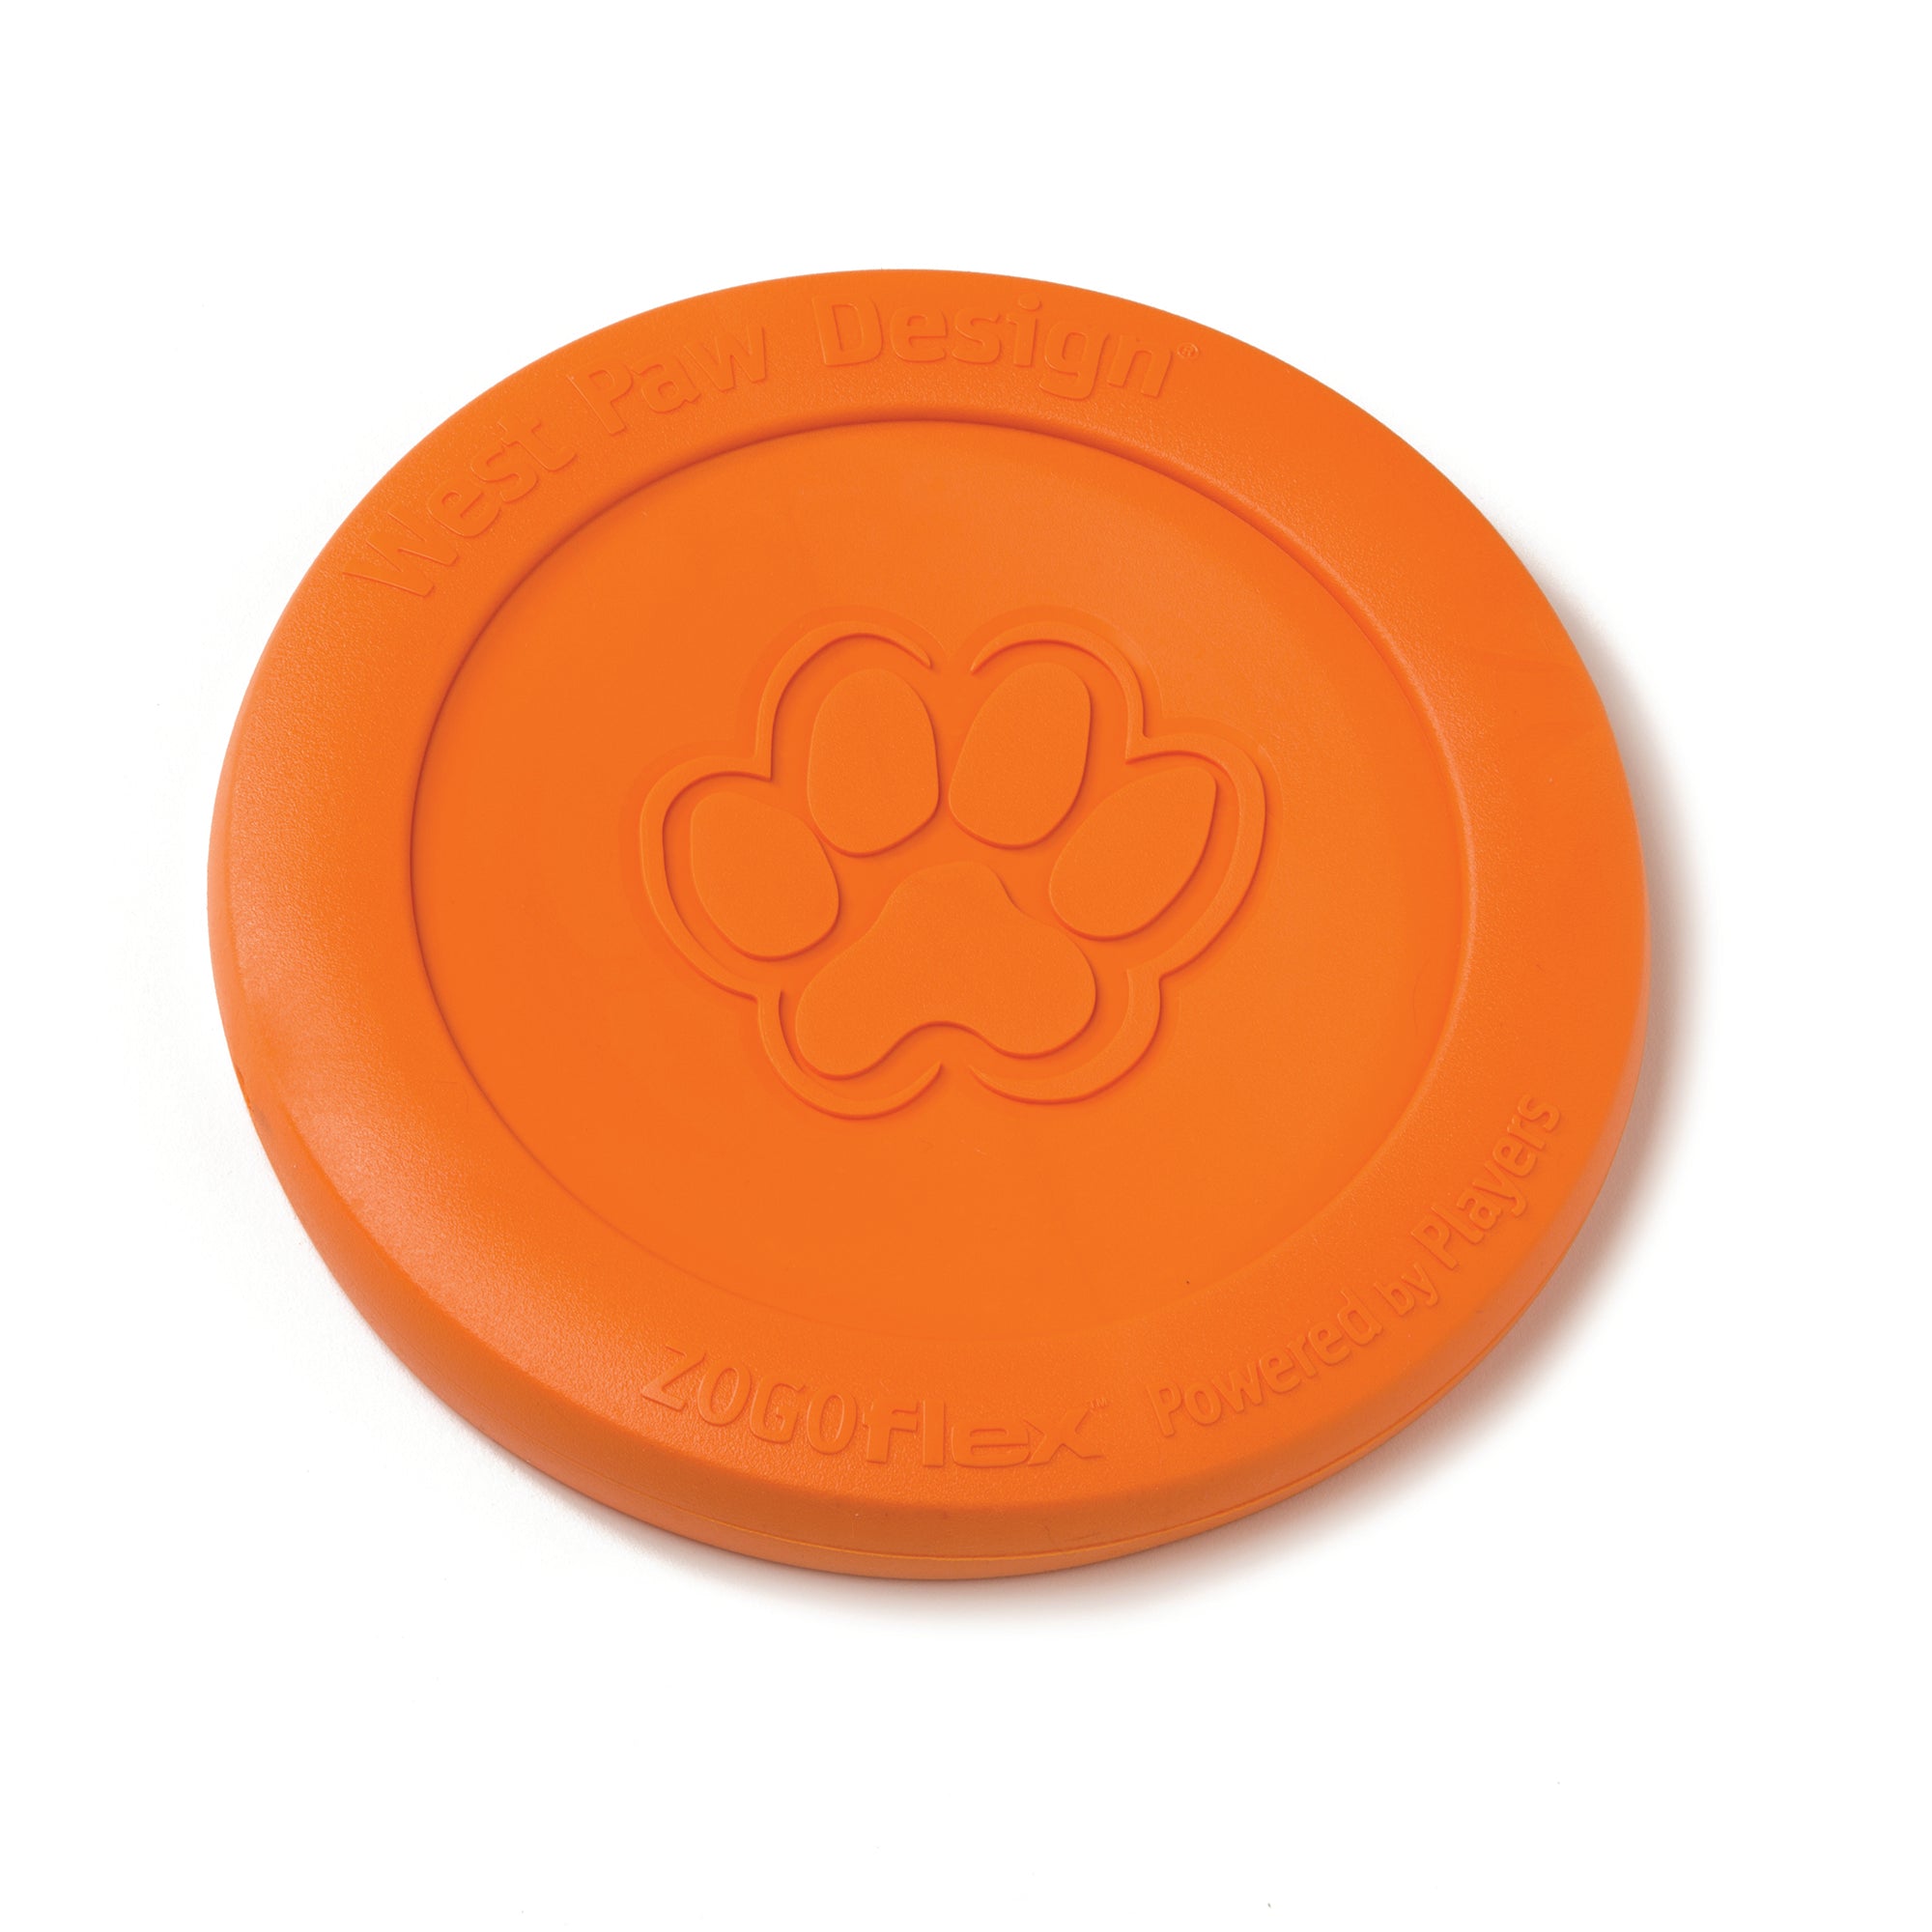 West Paw Dog Toy: Rumpus Tangerine / Medium